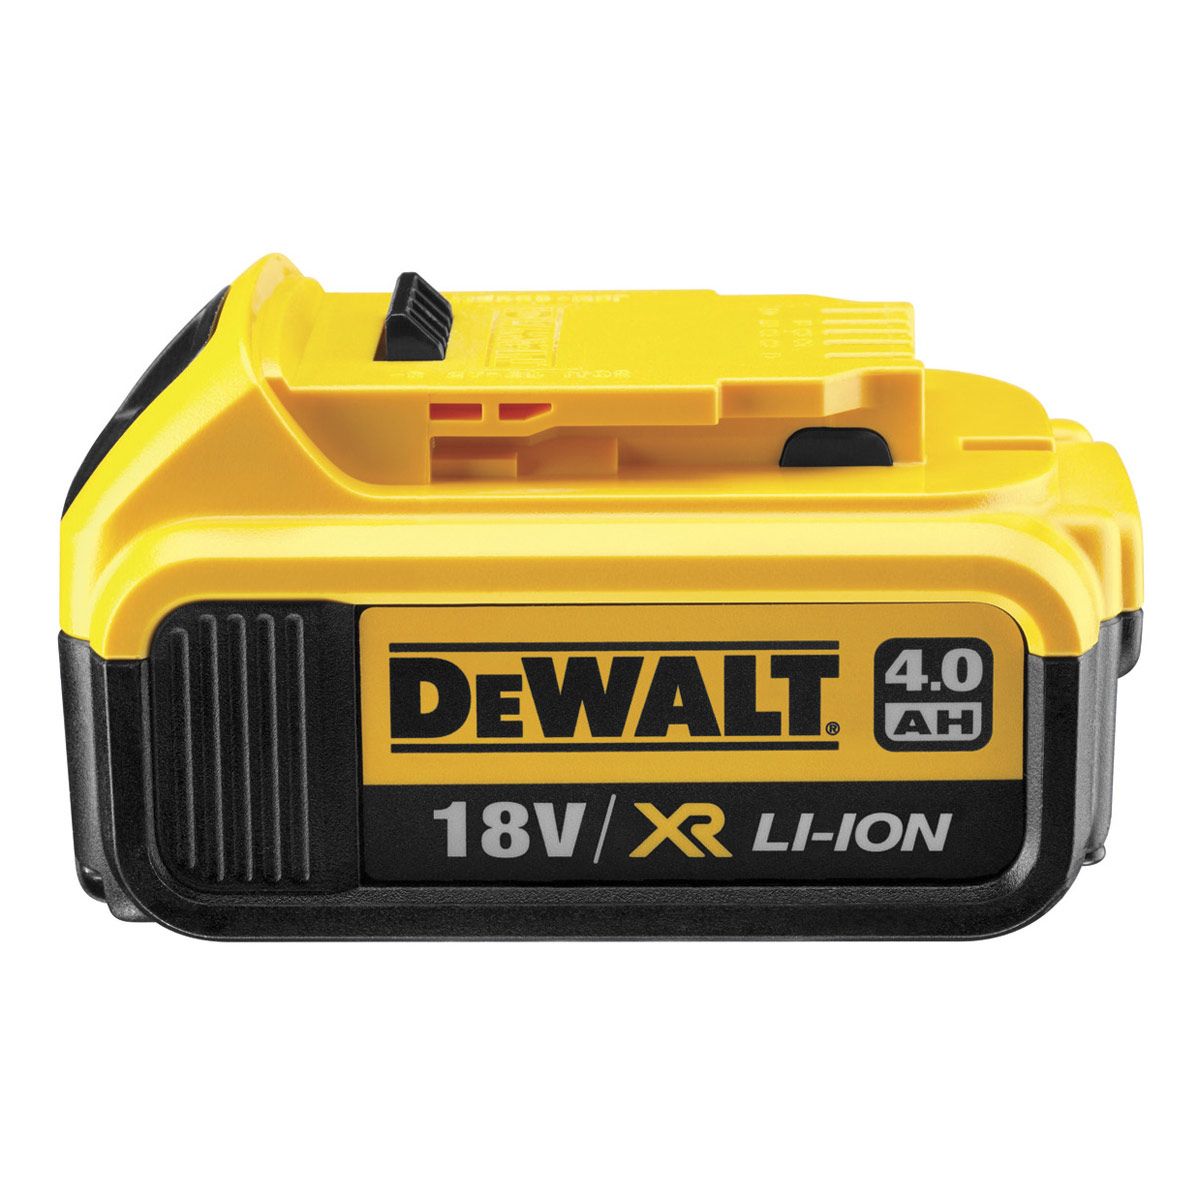 DeWalt DCB182-XJ - 18V 4.0Ah XR Li-ion Lithium Slide Battery